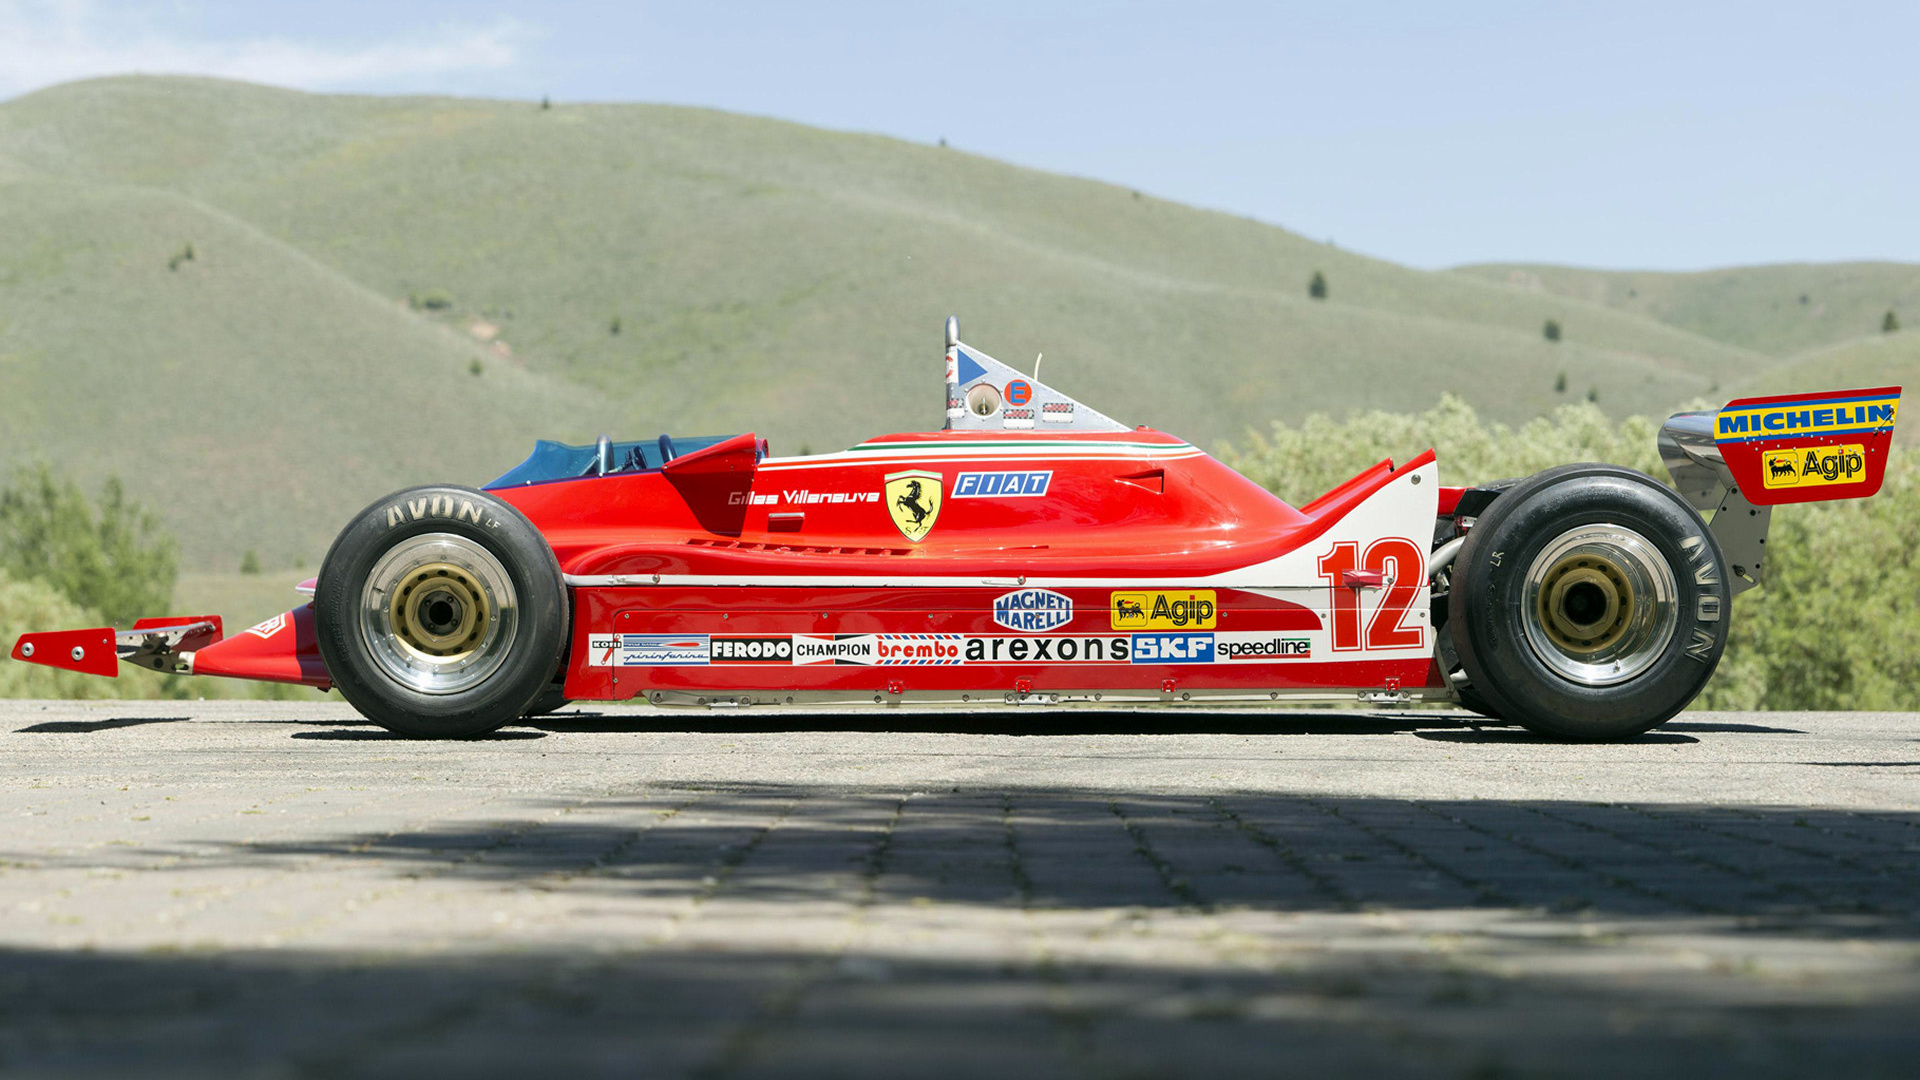 Télécharger des fonds d'écran Ferrari 312 T4 HD